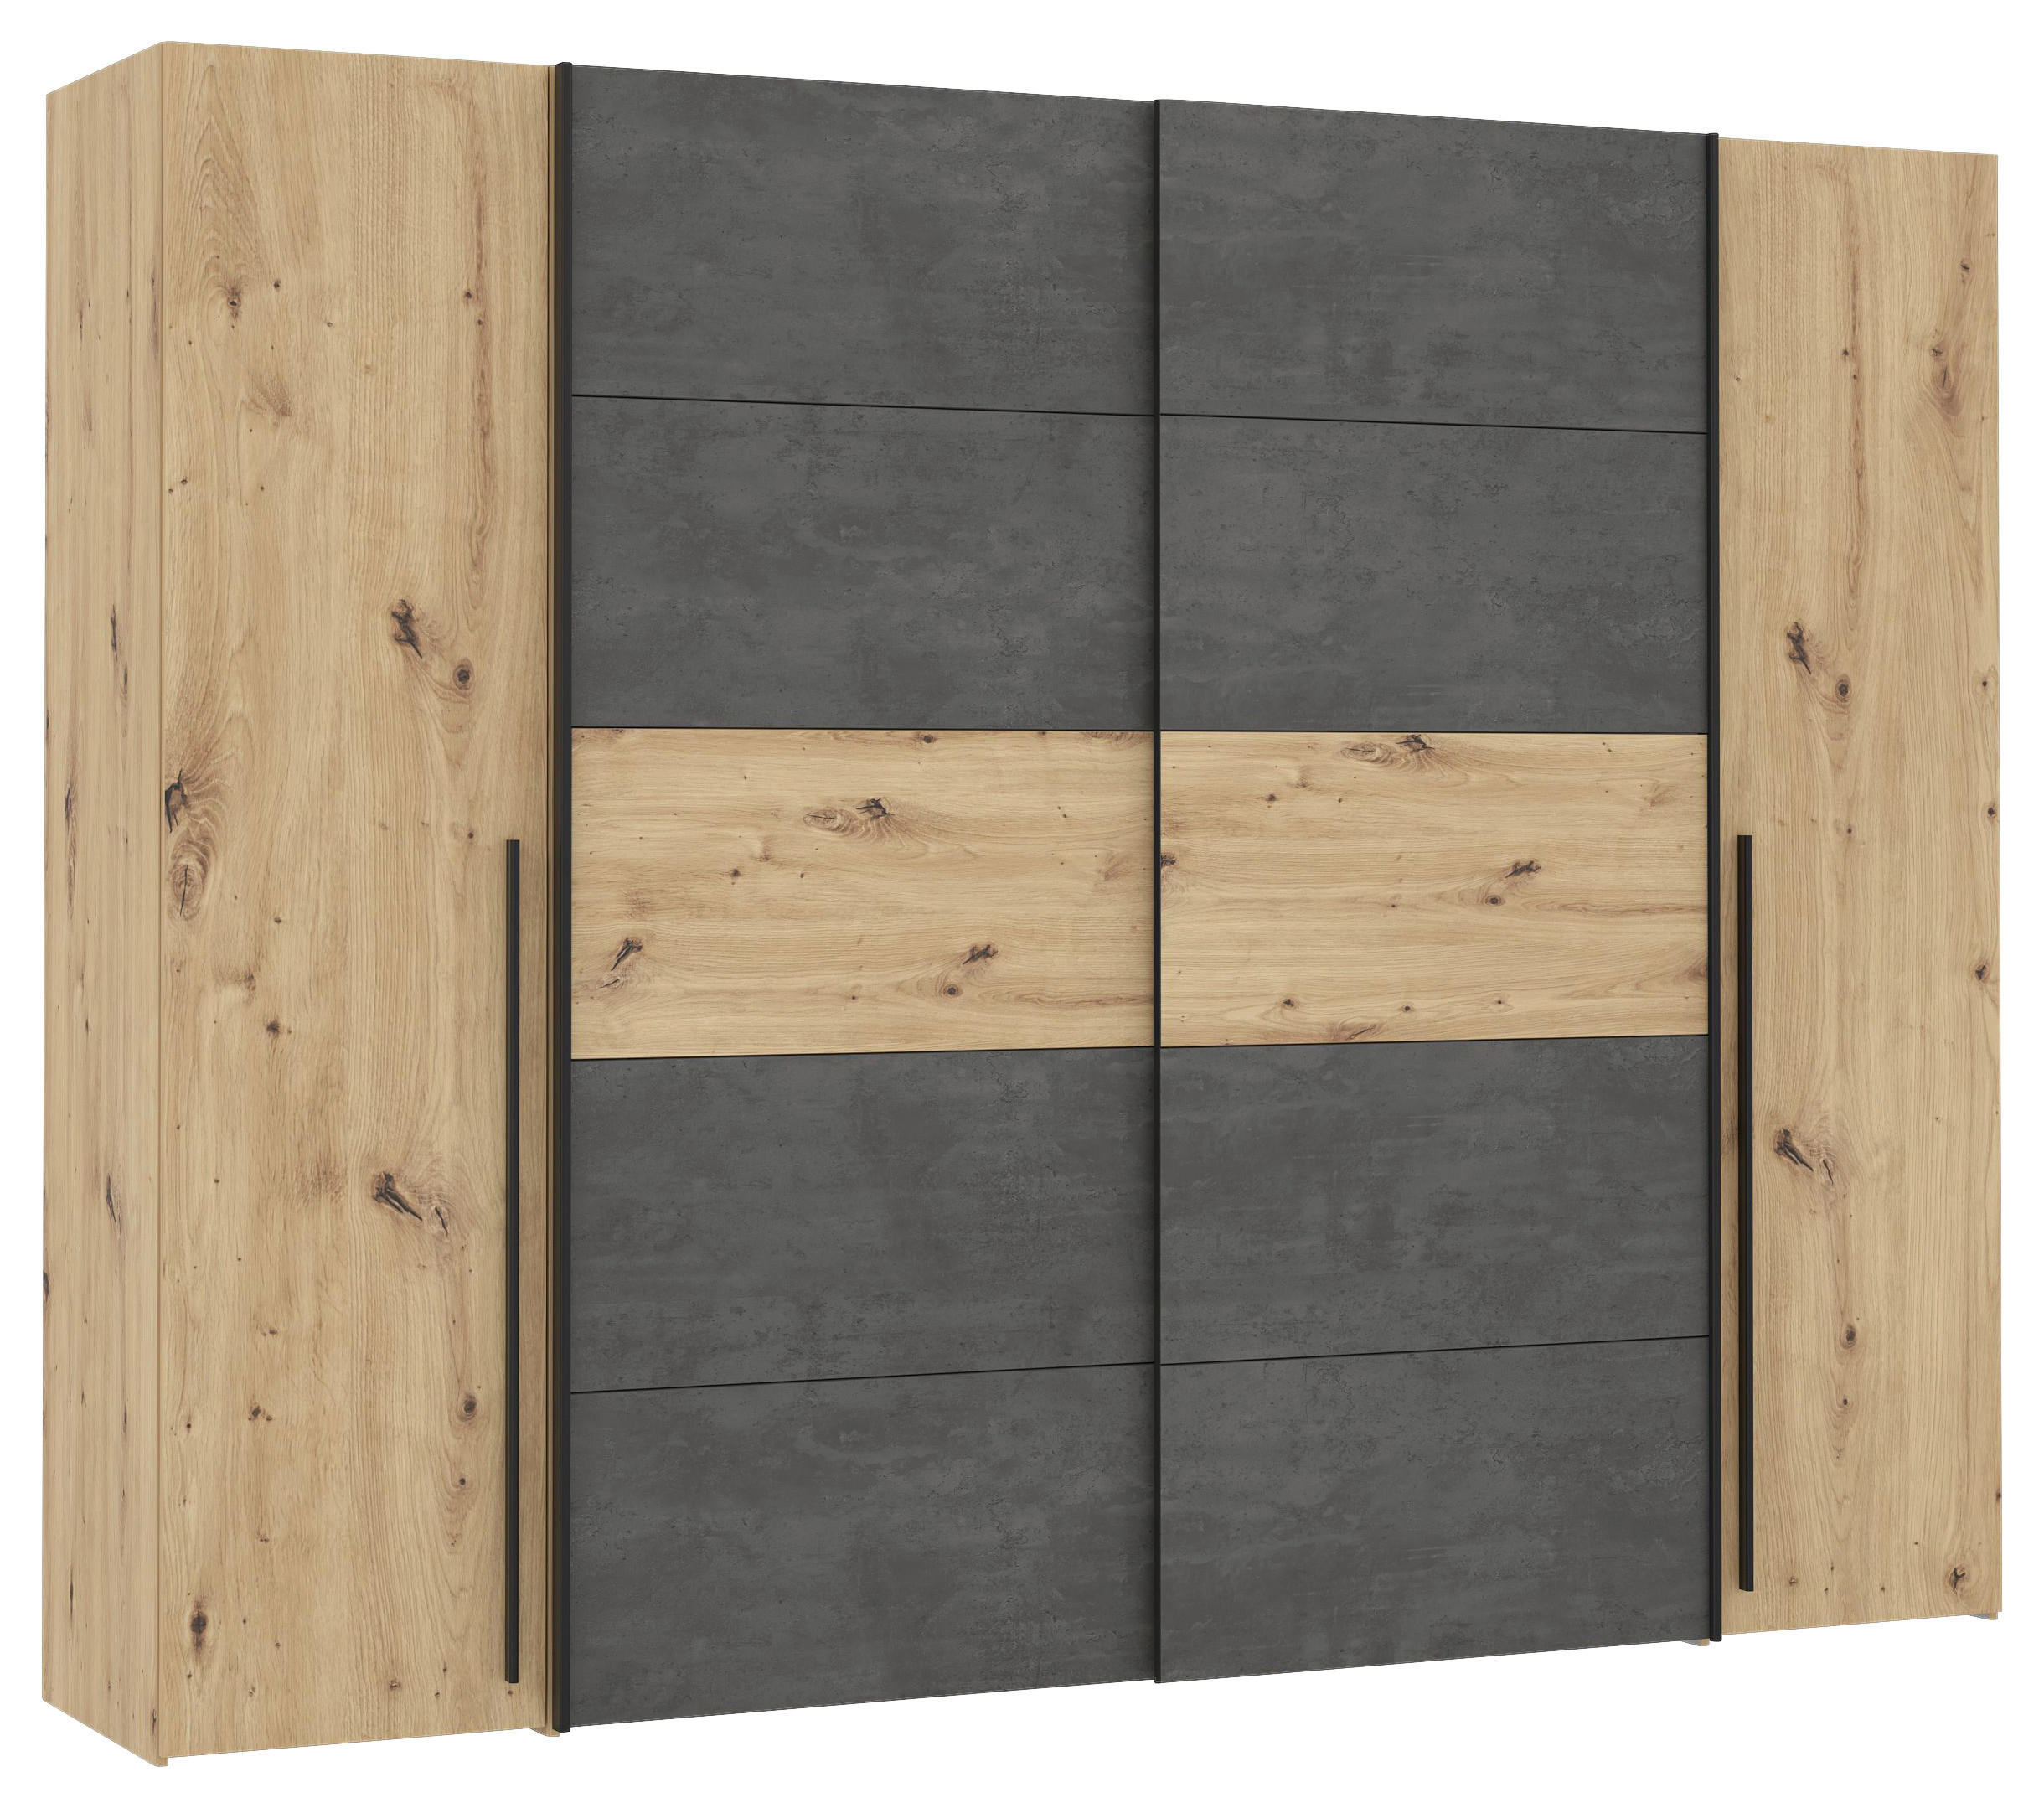 GARDEROB 270/210/61 cm 4-dörrar - mörkgrå/svart, Modern, metall/träbaserade material (270/210/61cm) - MID.YOU